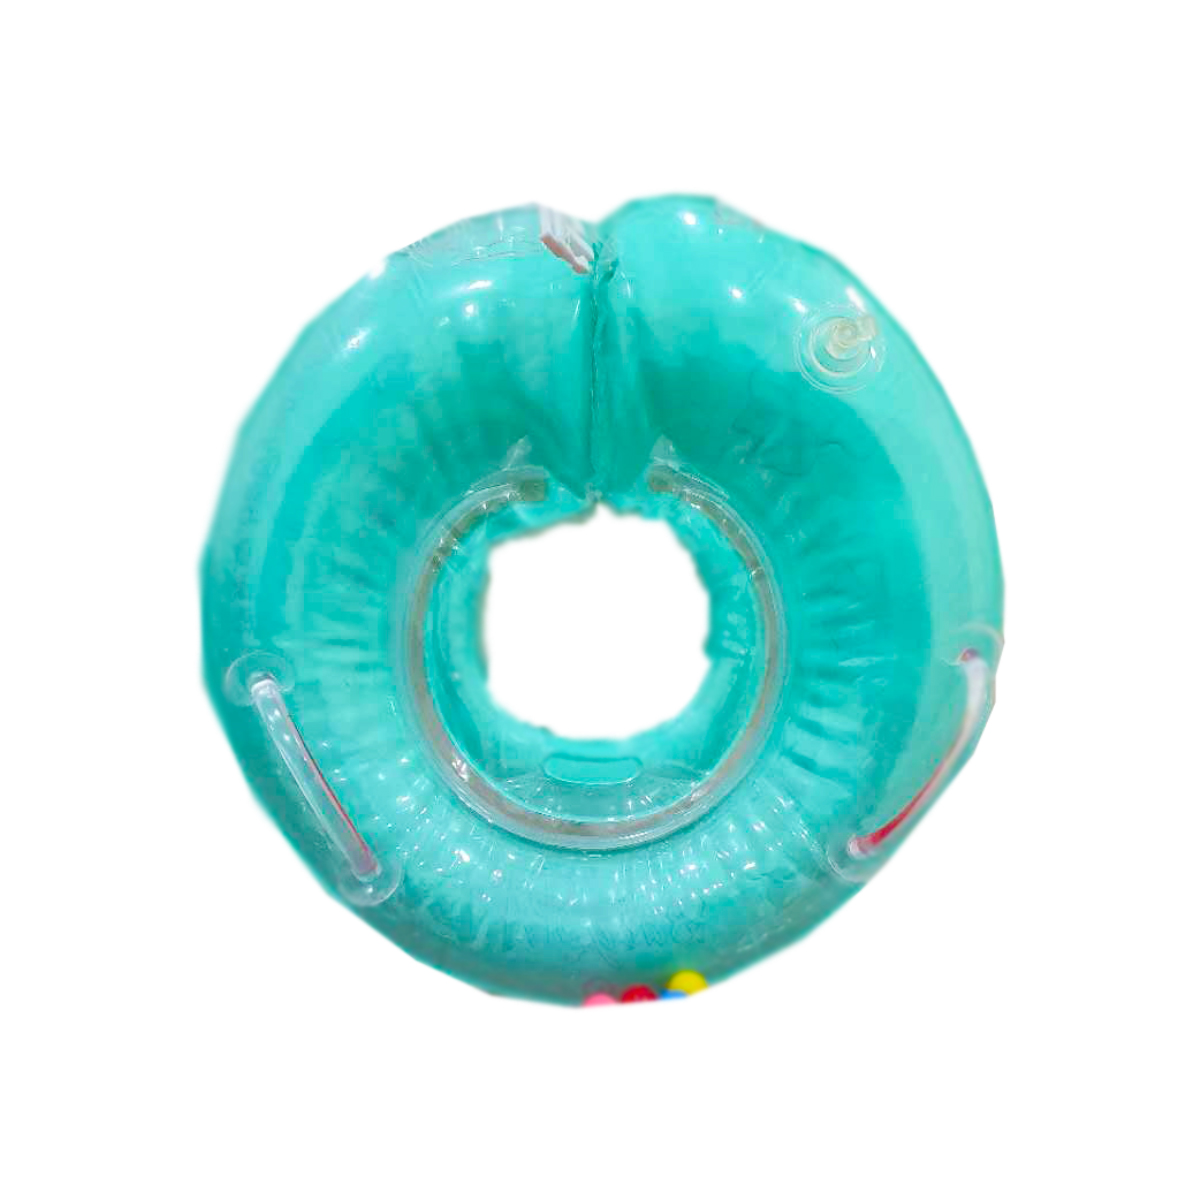 BabySPA Regular Inflatable Neck Float